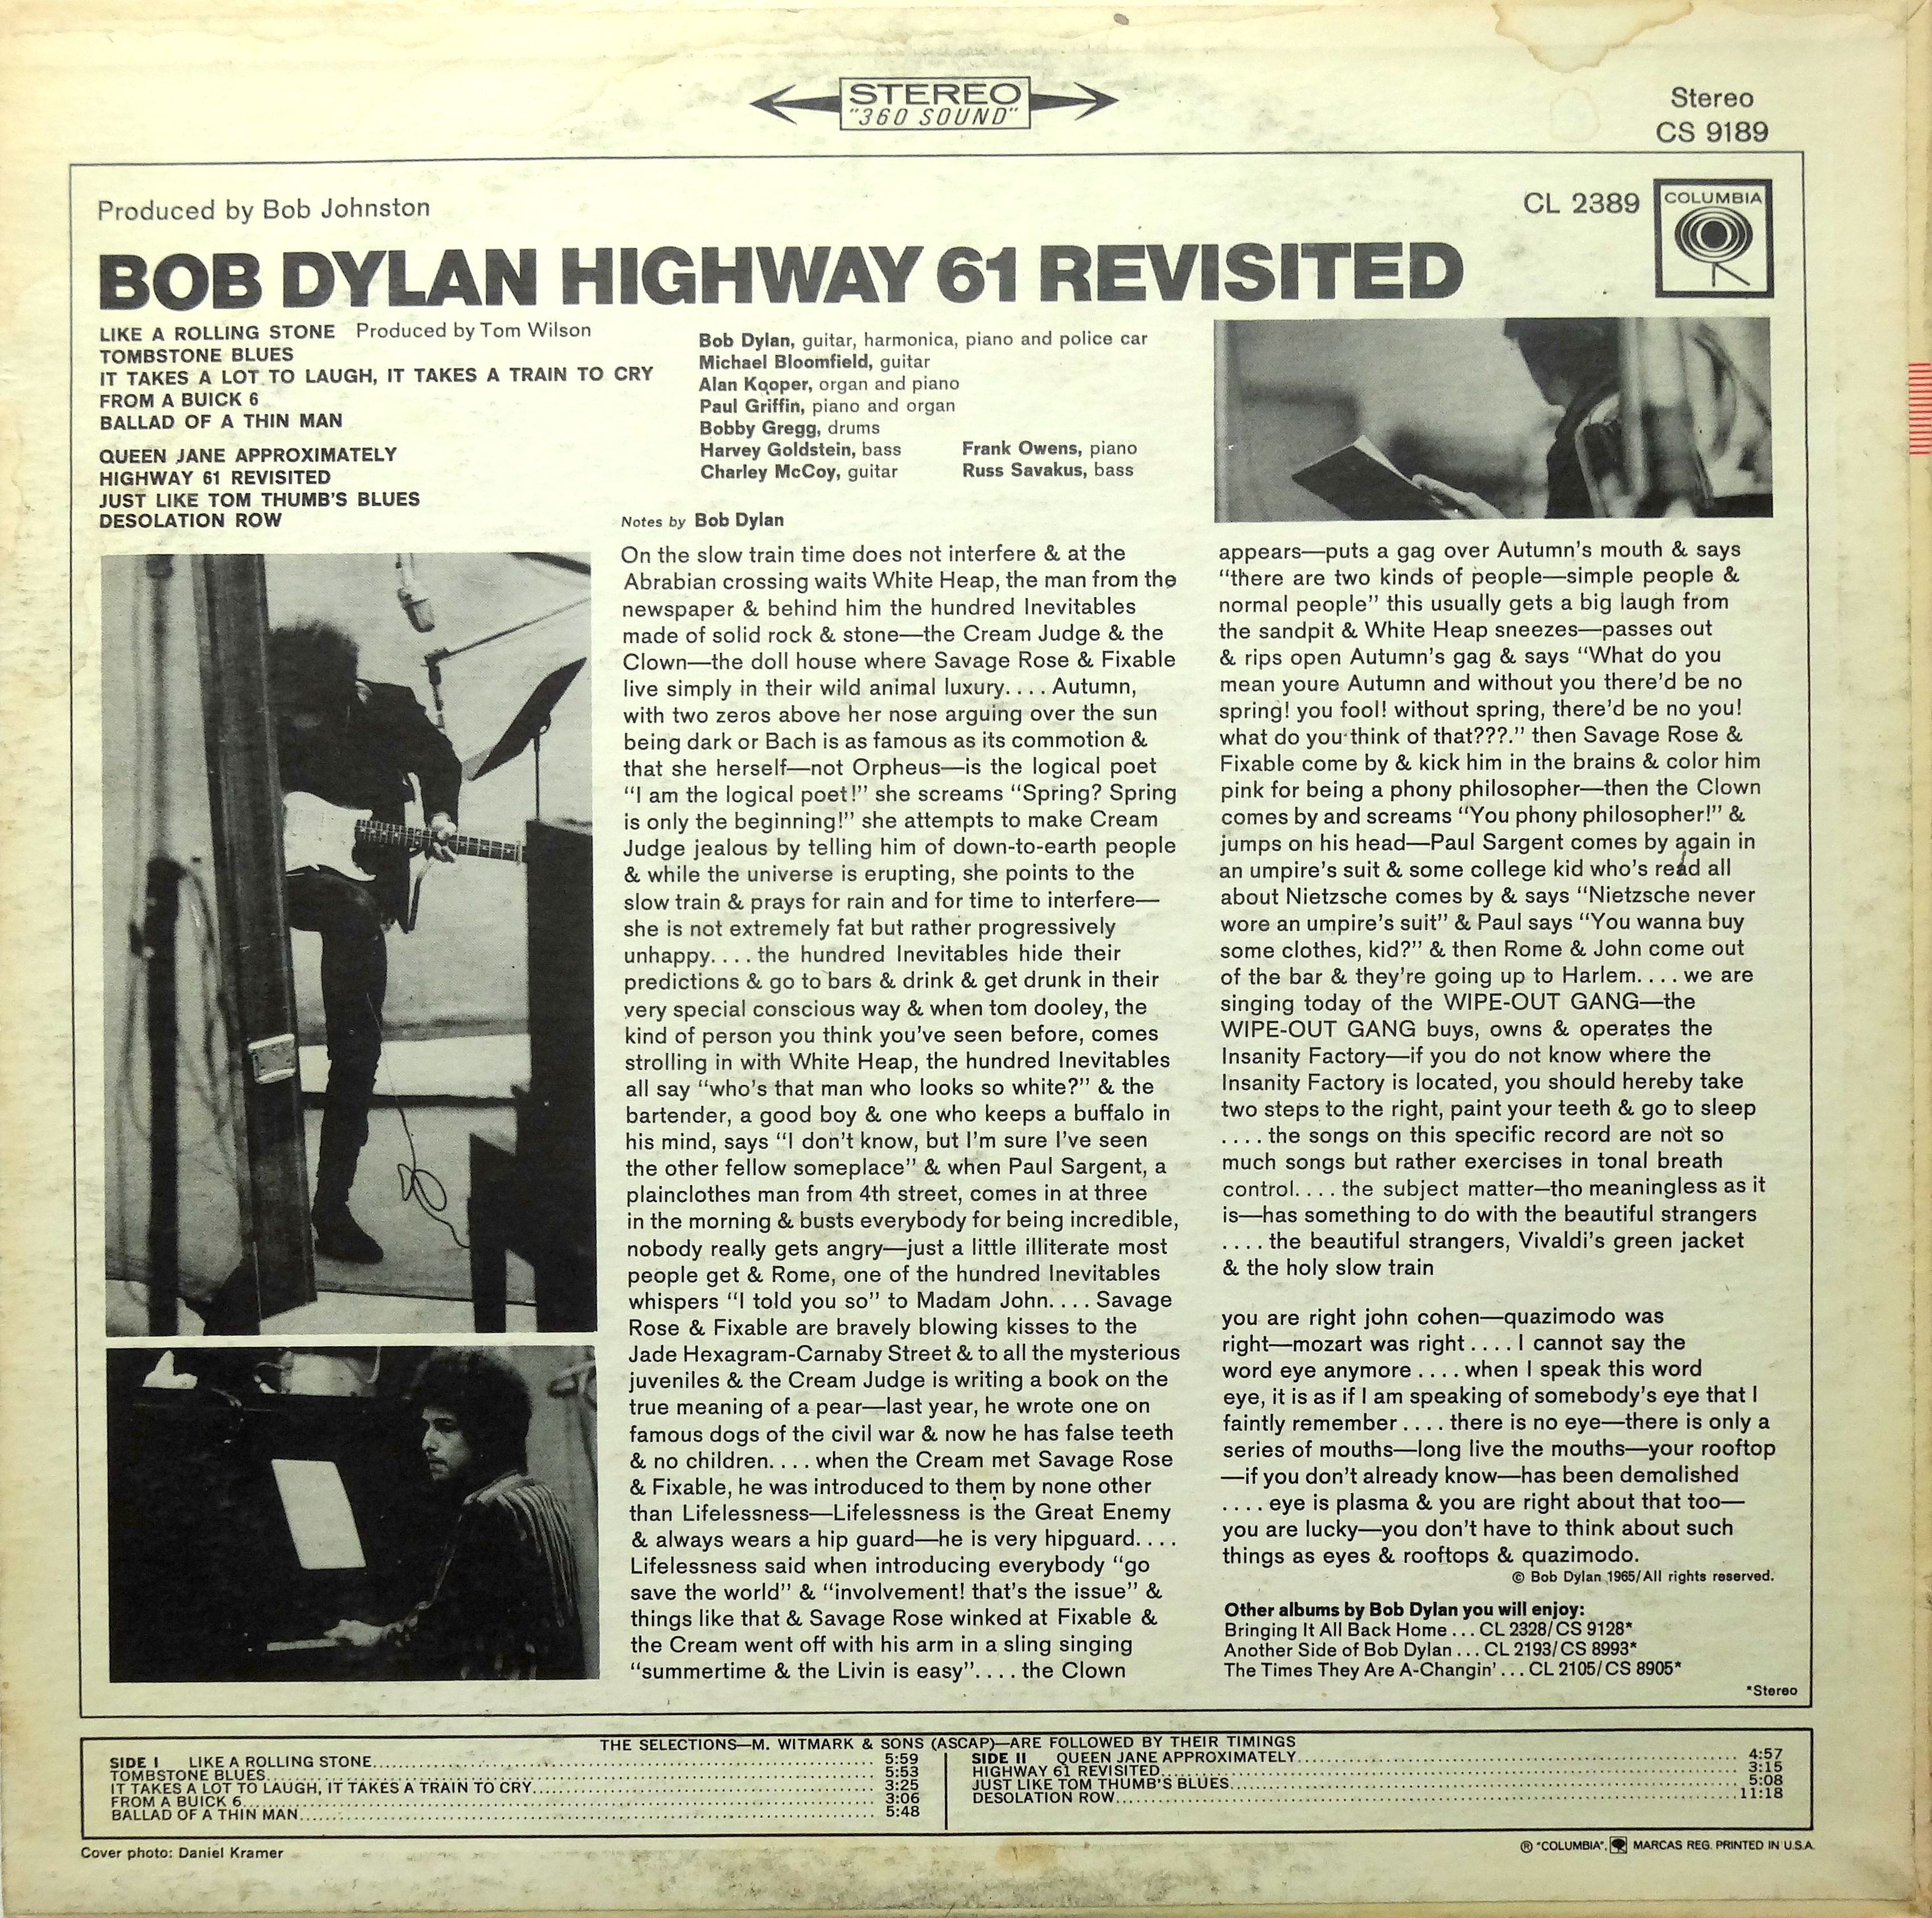 Bob Dylan's Bringing It All Back Home Revisited